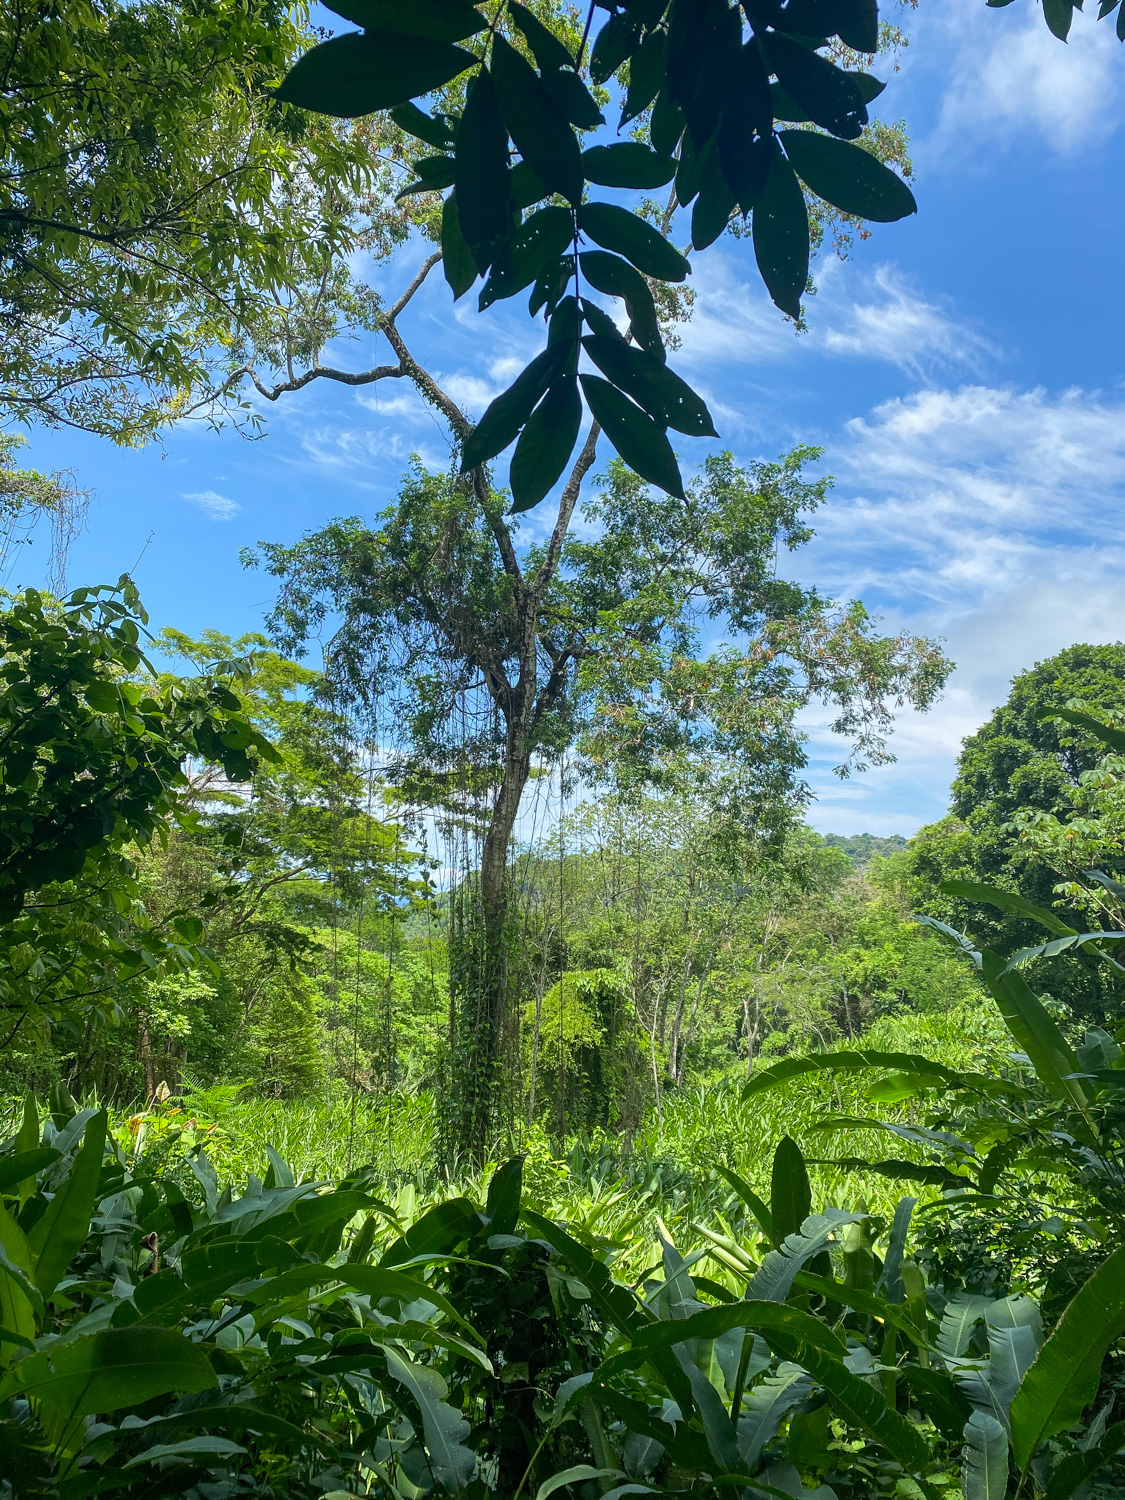 The Green Season in Costa Rica